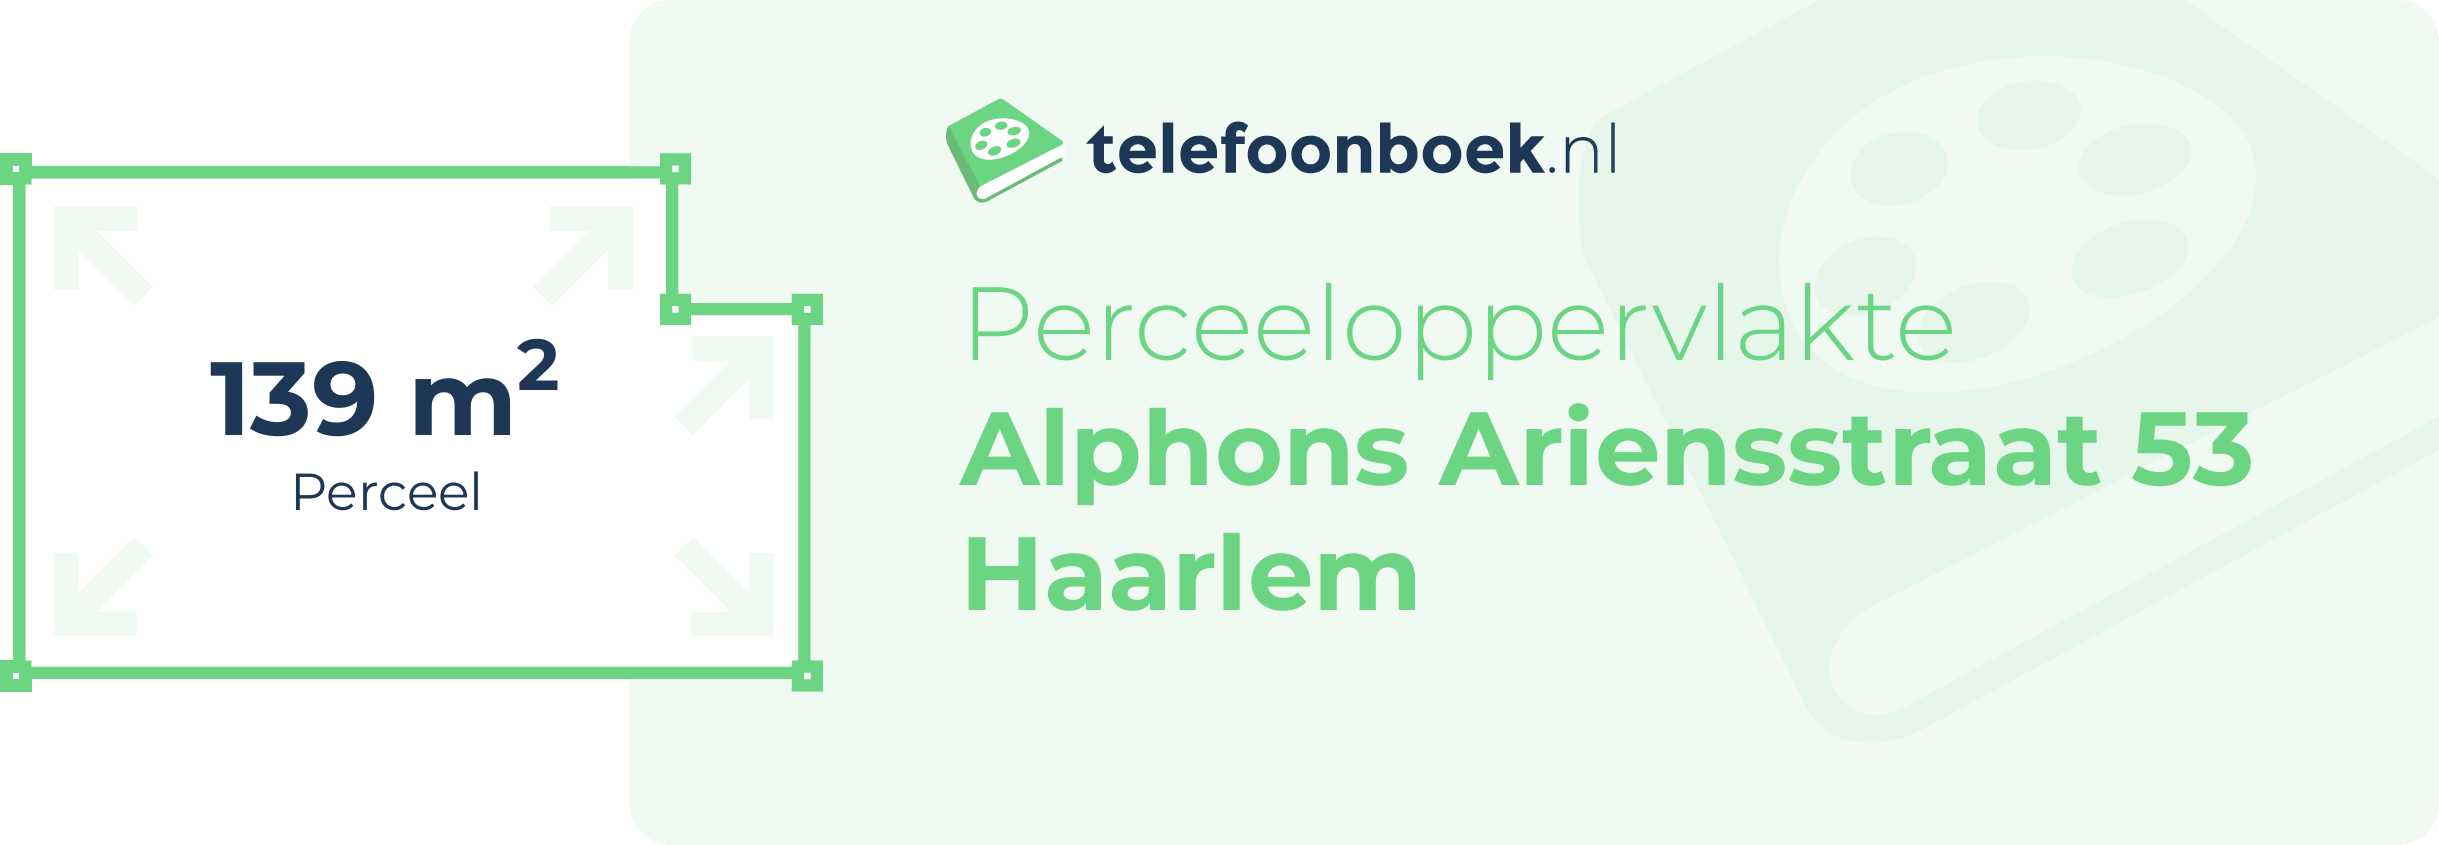 Perceeloppervlakte Alphons Ariensstraat 53 Haarlem